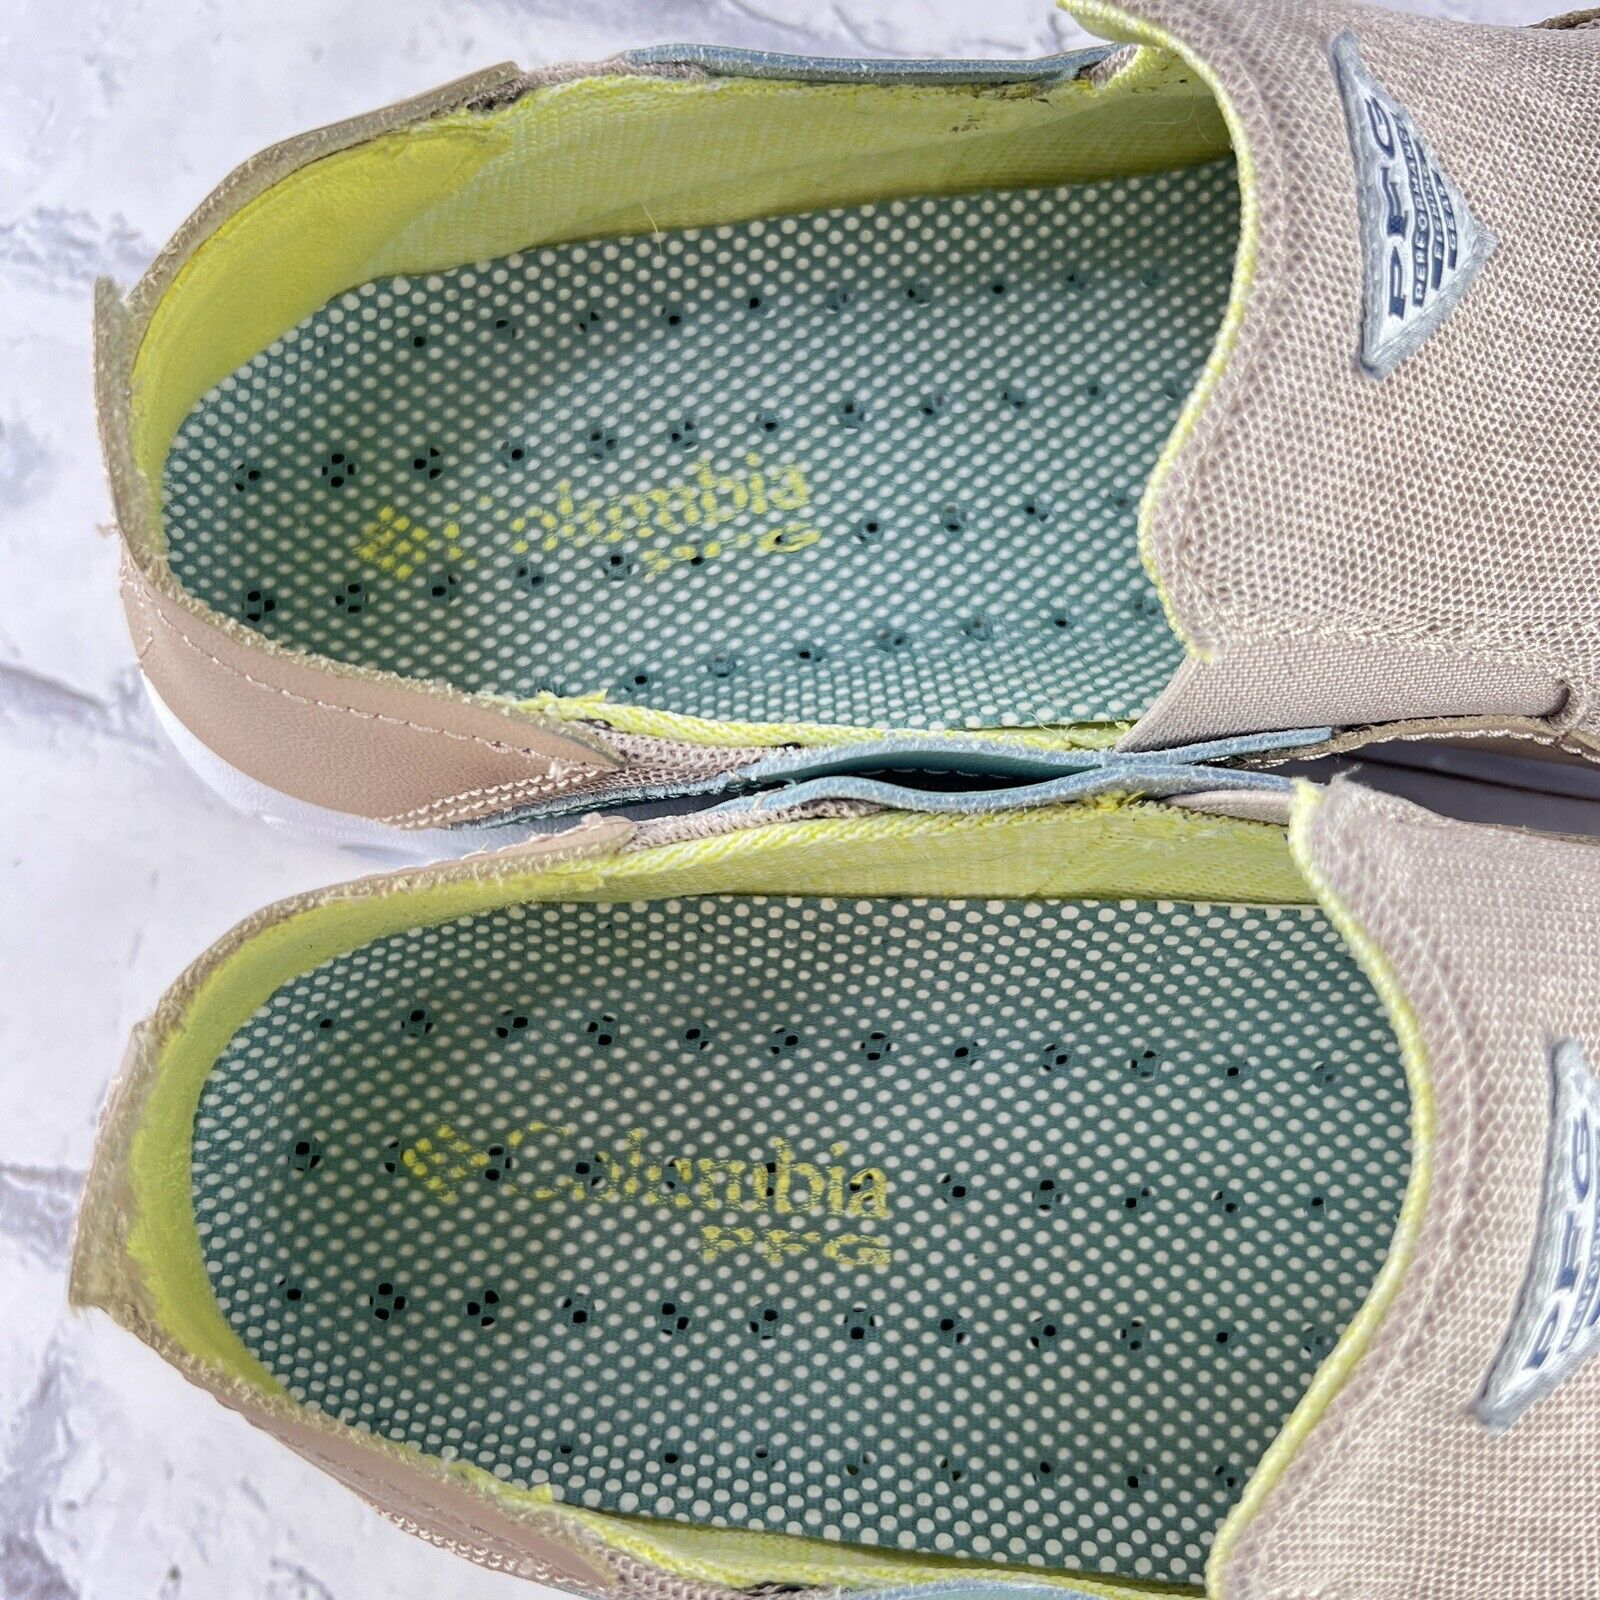 COLUMBIA Bahama Vent Hightide PFG Fishing Shoes Men’s 10 Water Fossil Neon